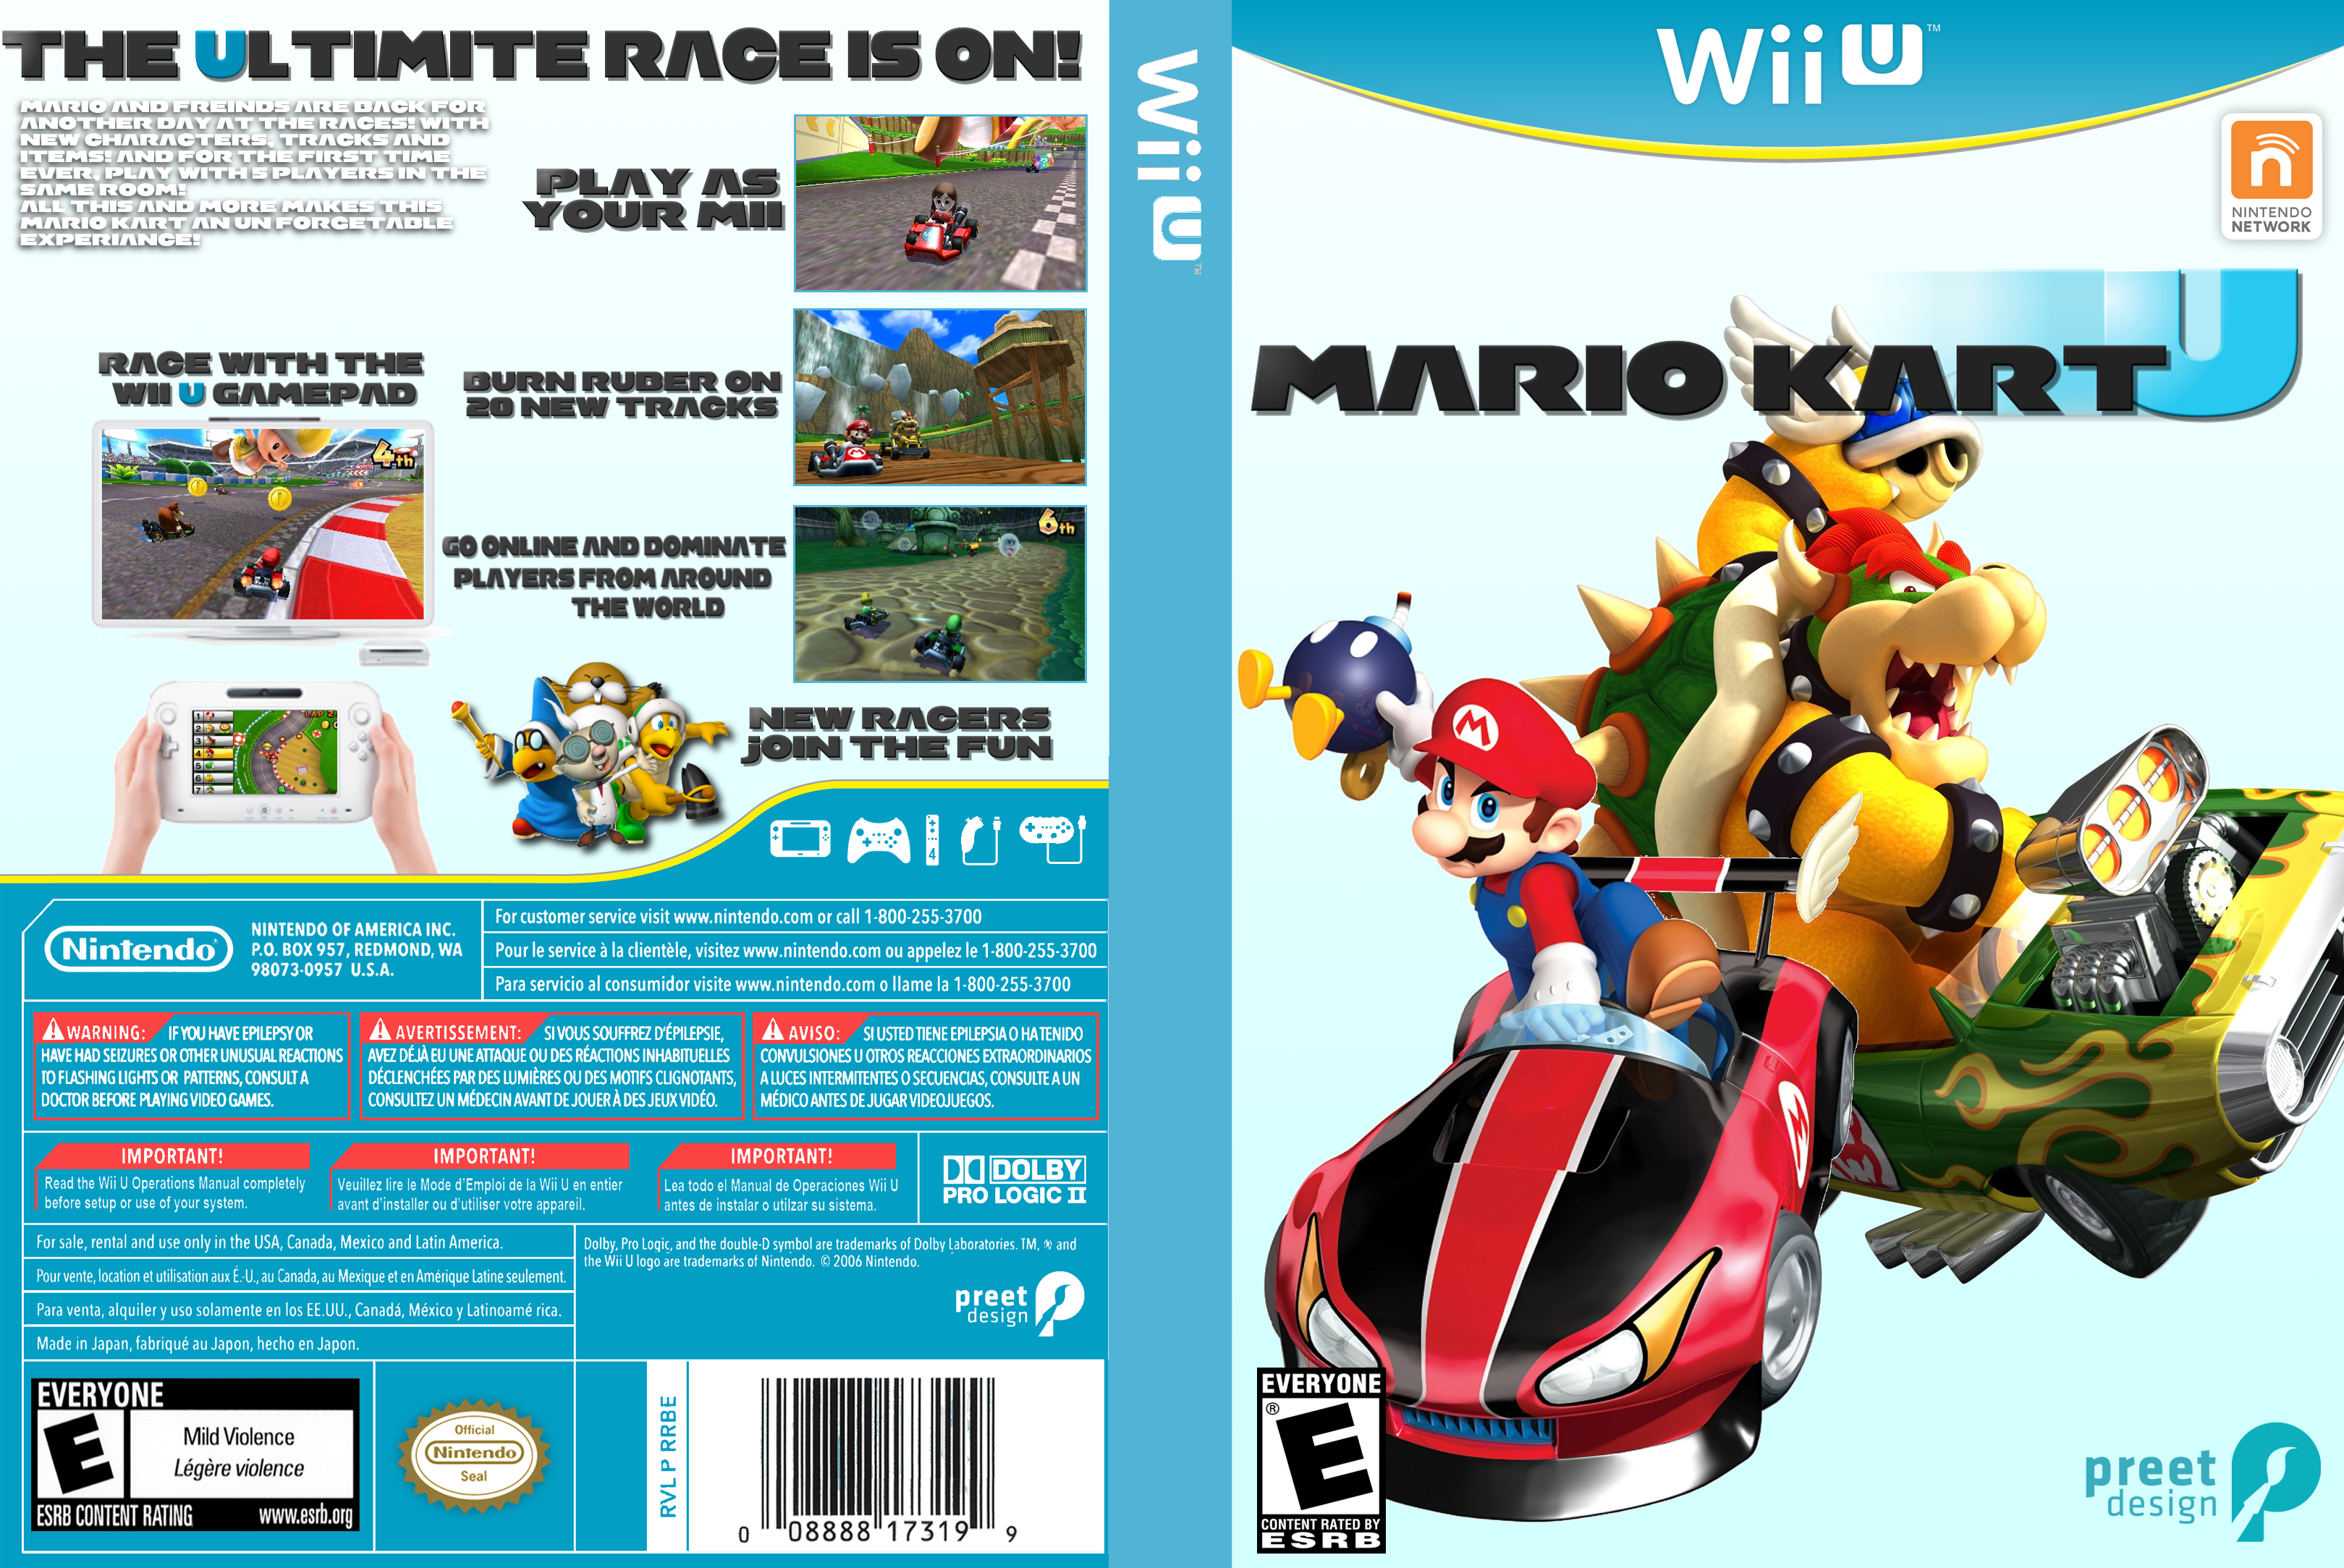 Mario Kart U box cover